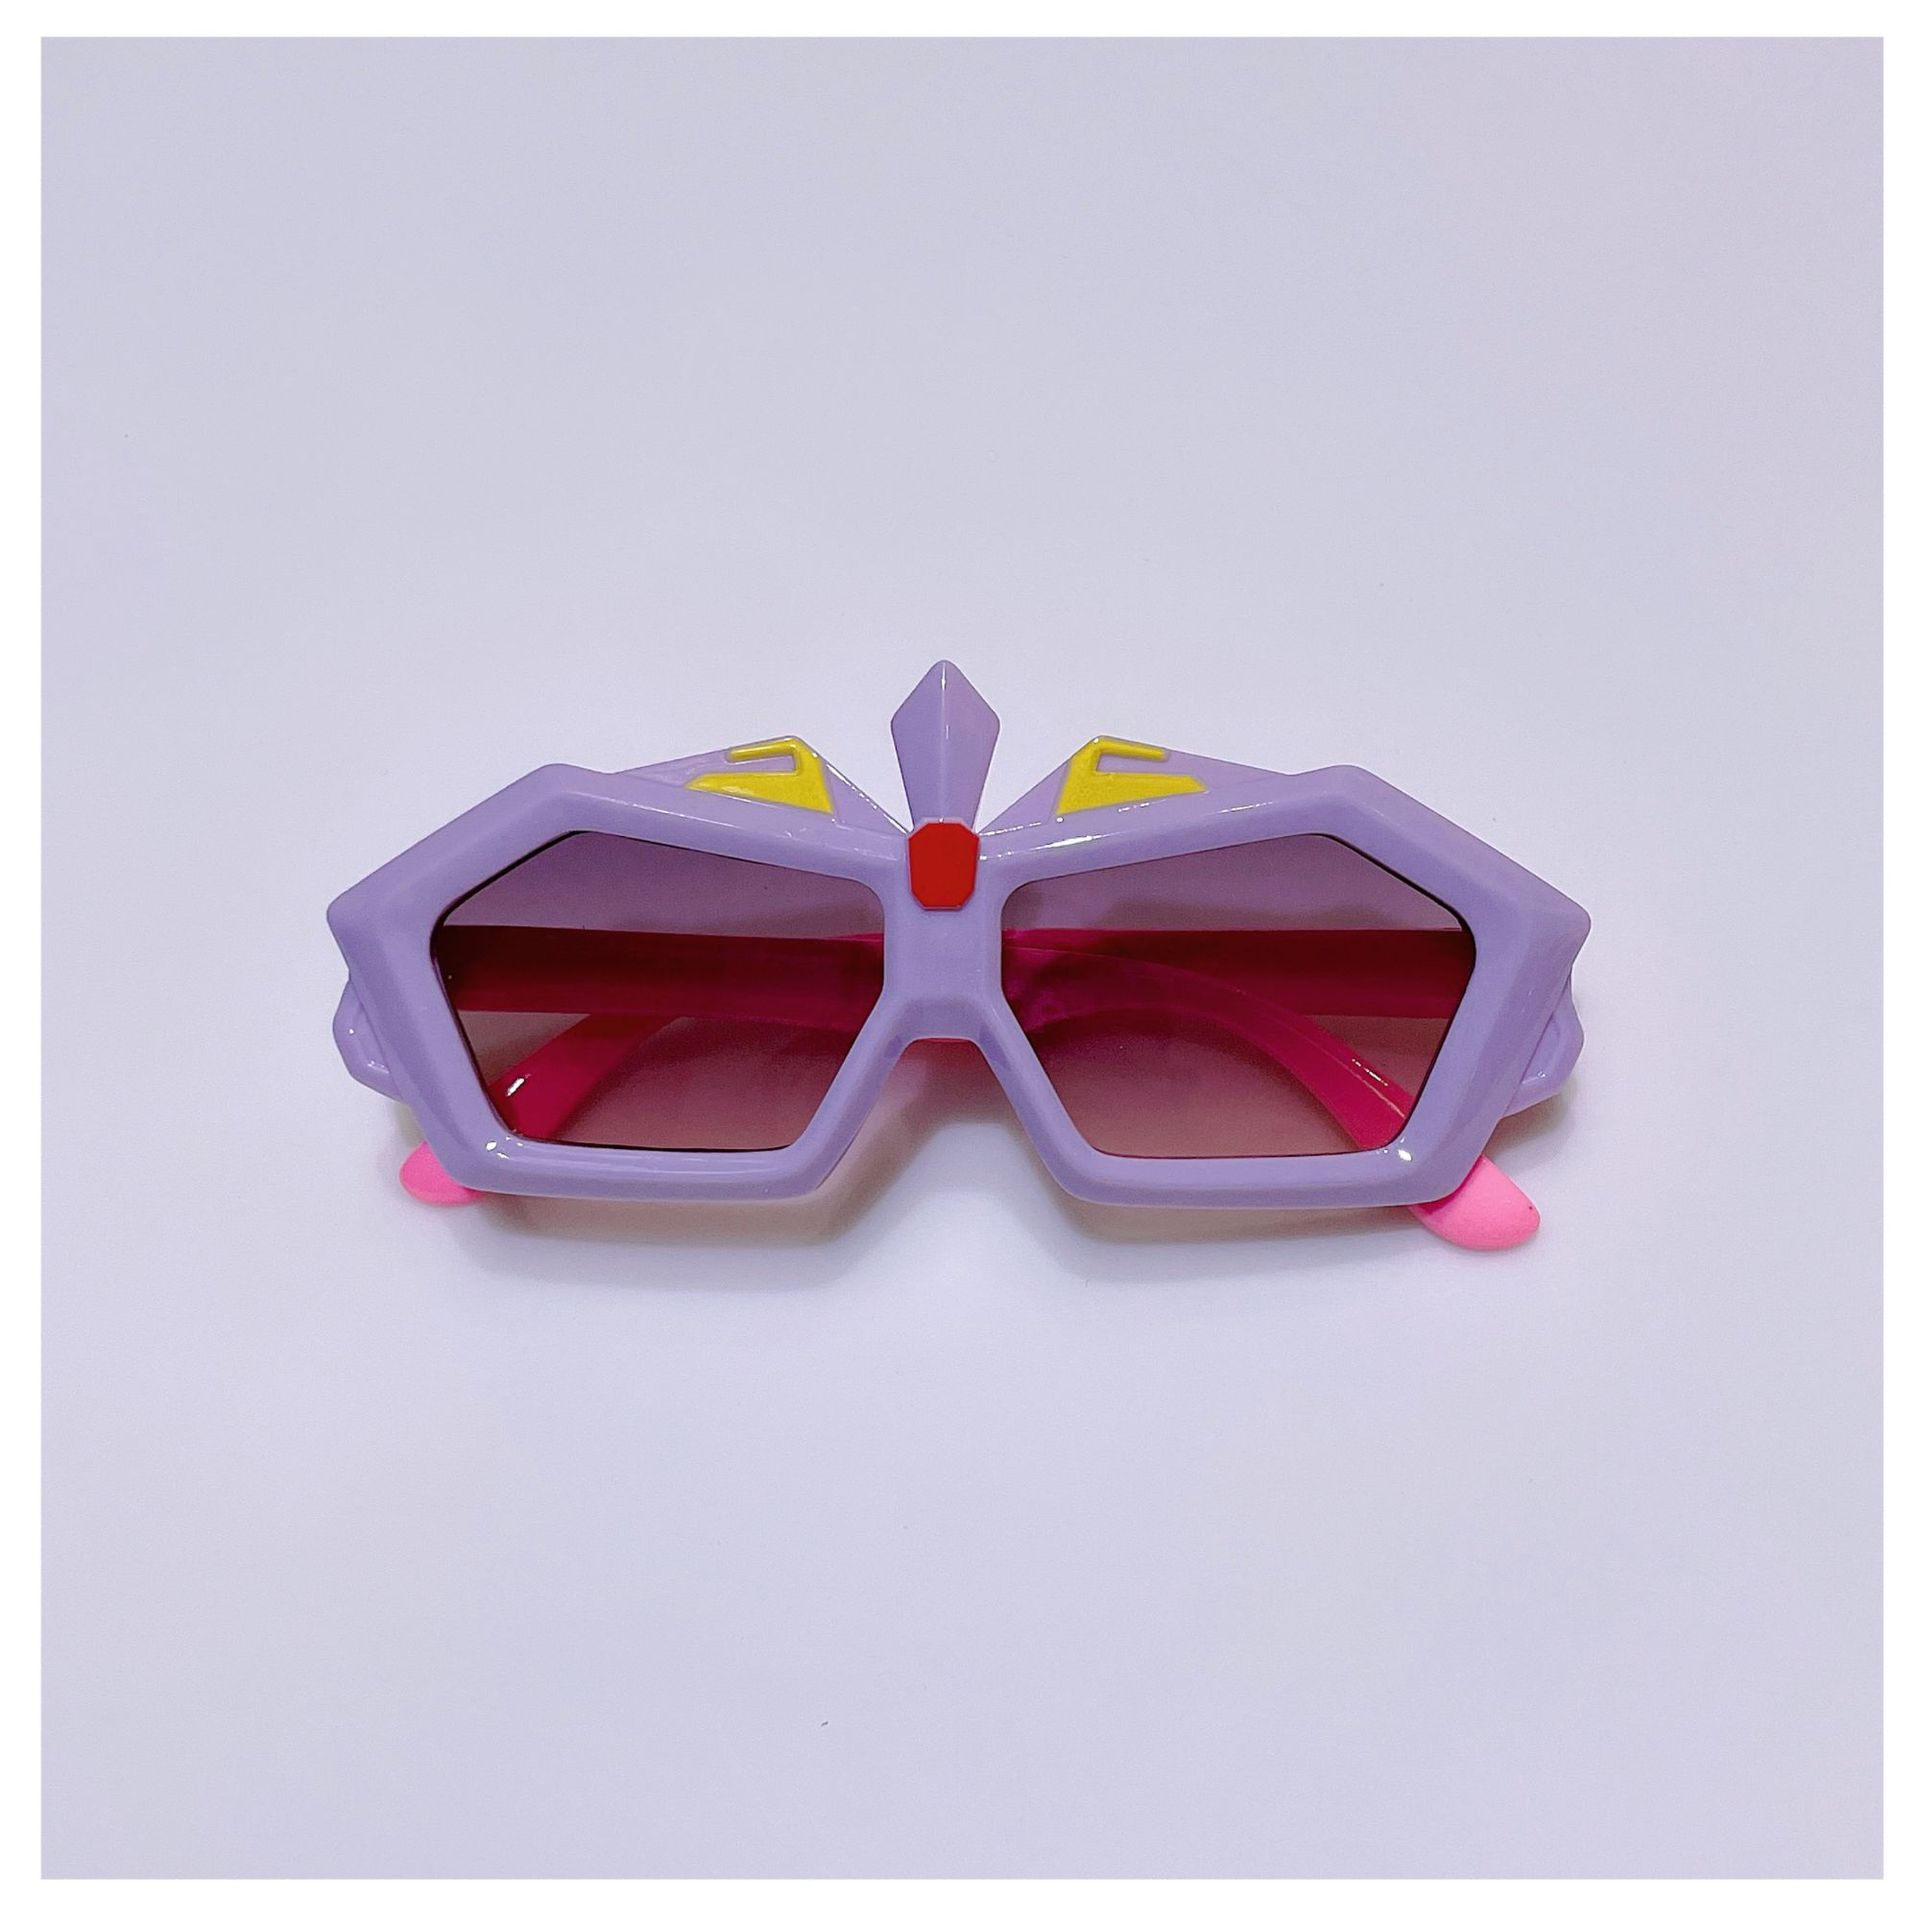 Boys Robot Sunglasses New Kids Sunglasses Modeling Toys Girls Summer UV Protection Sun Protection Glasses